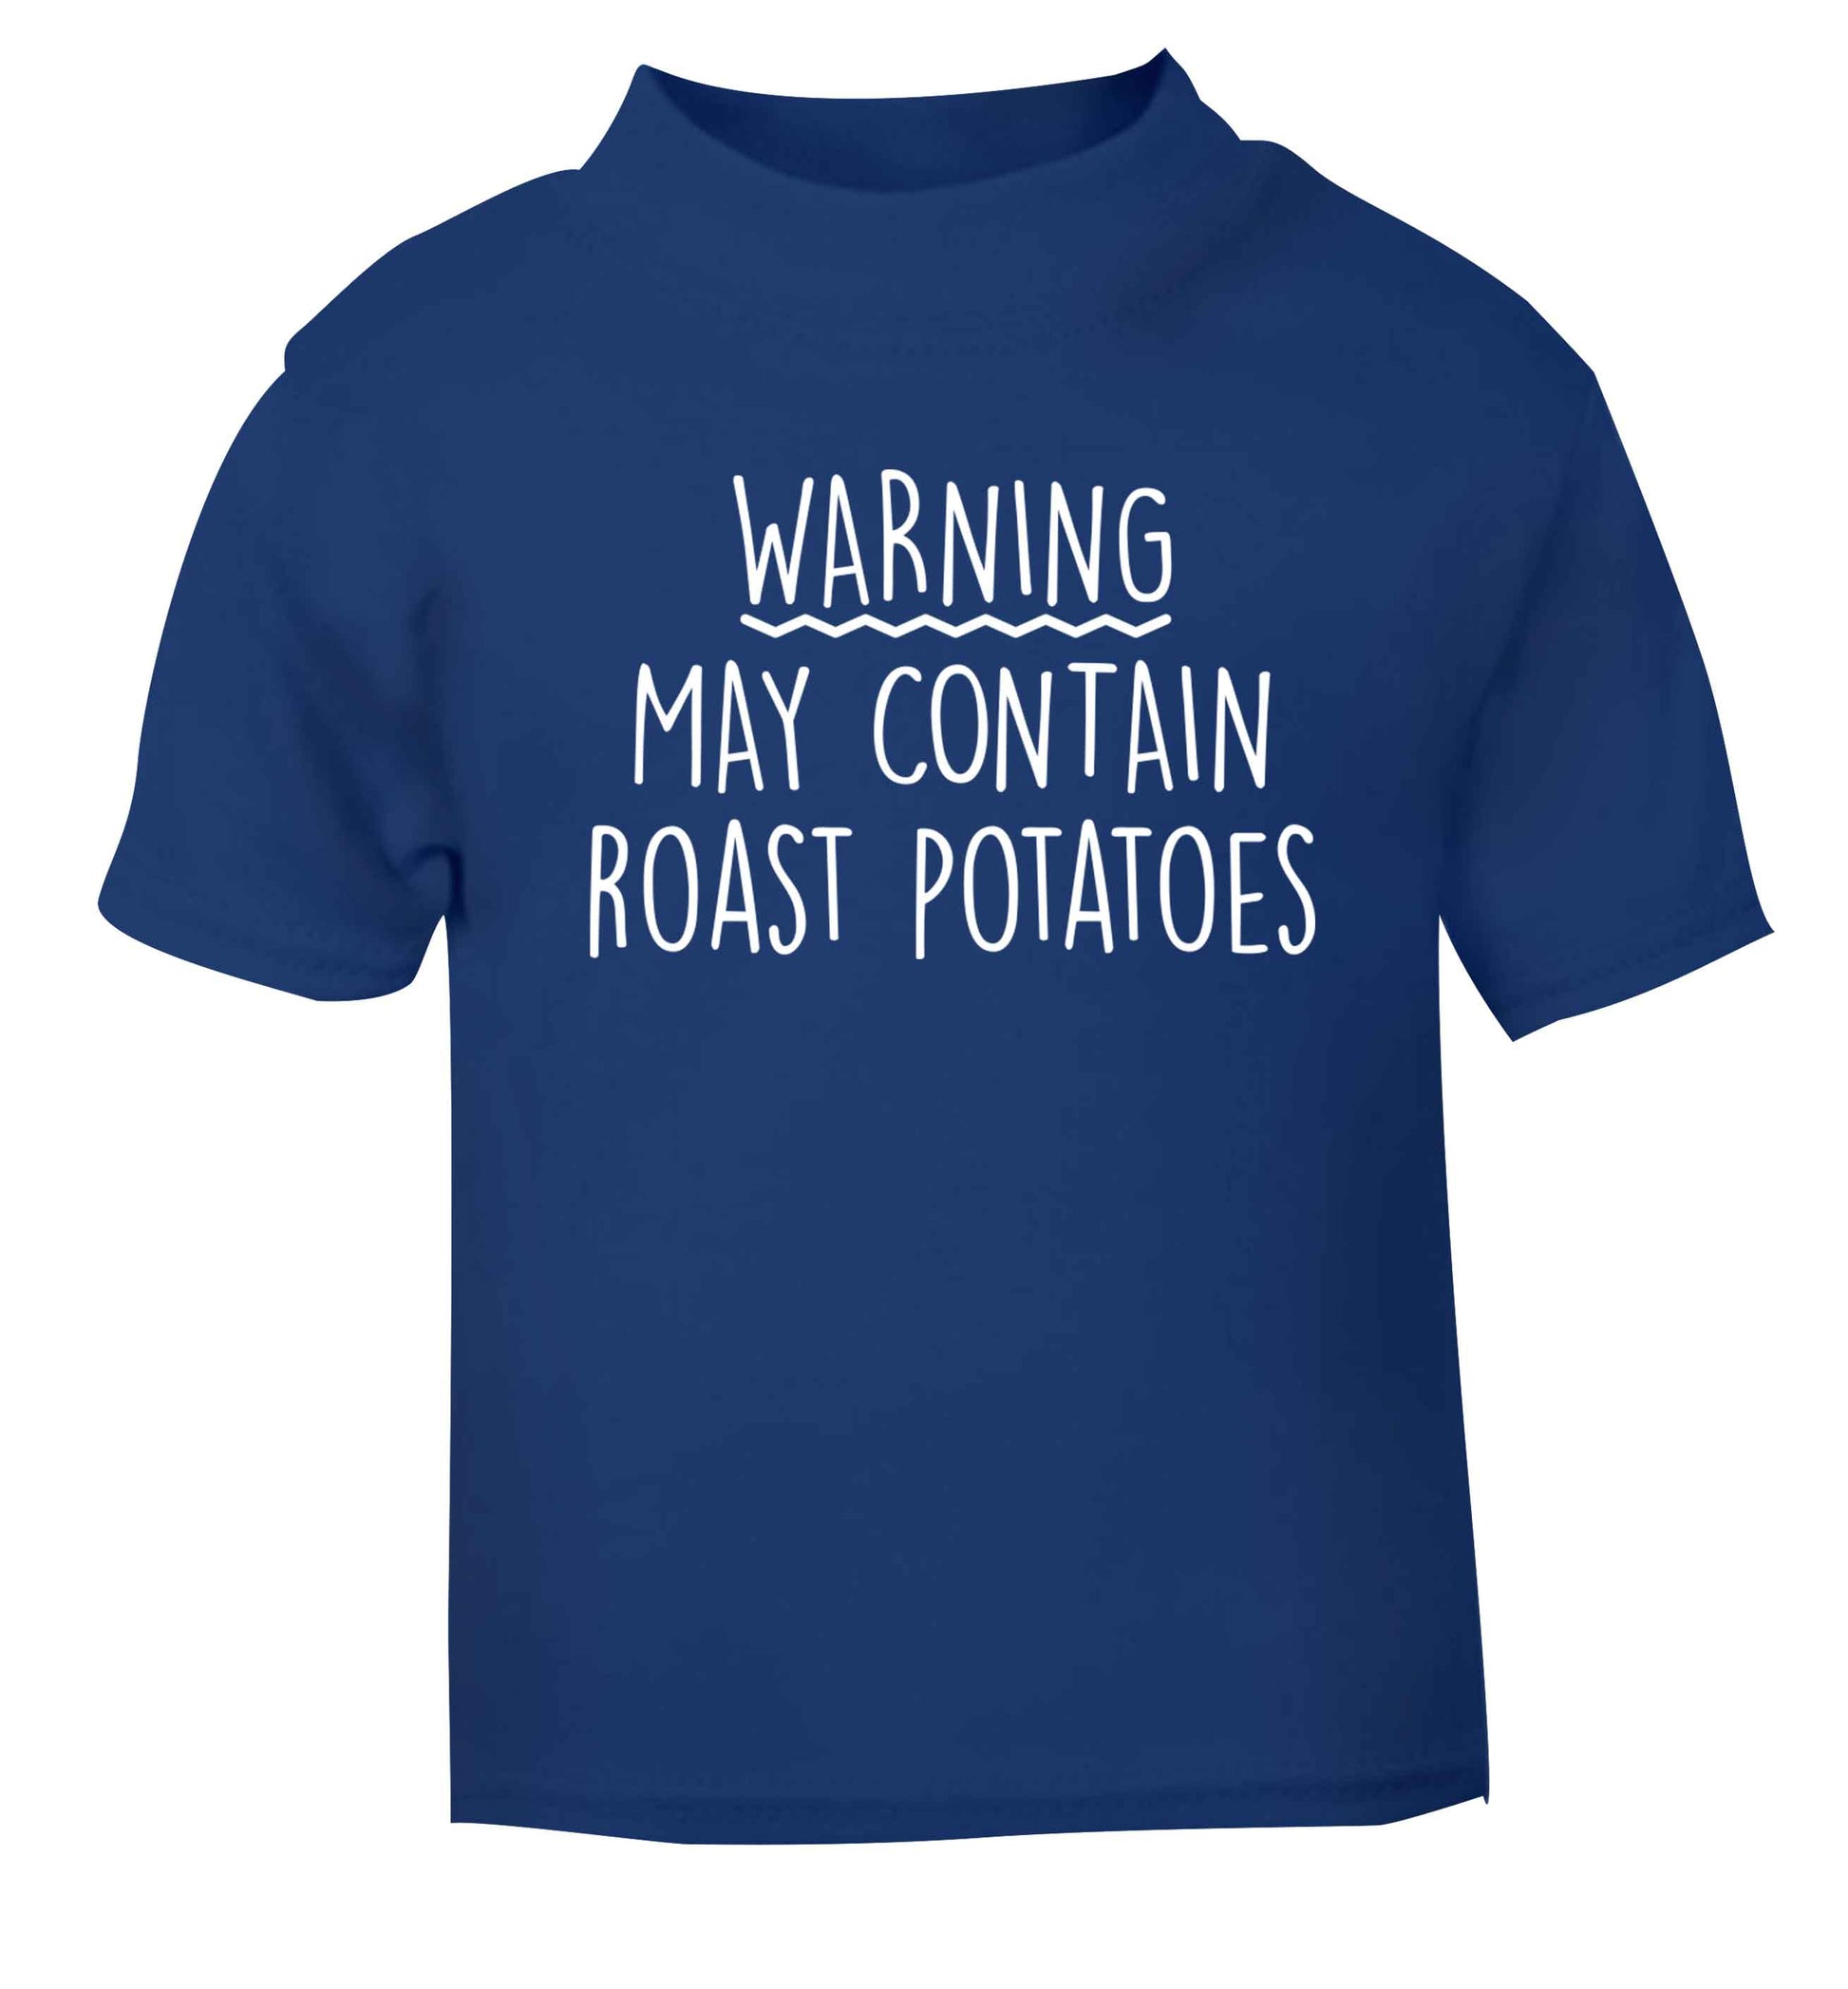 Warning may containg roast potatoes blue baby toddler Tshirt 2 Years